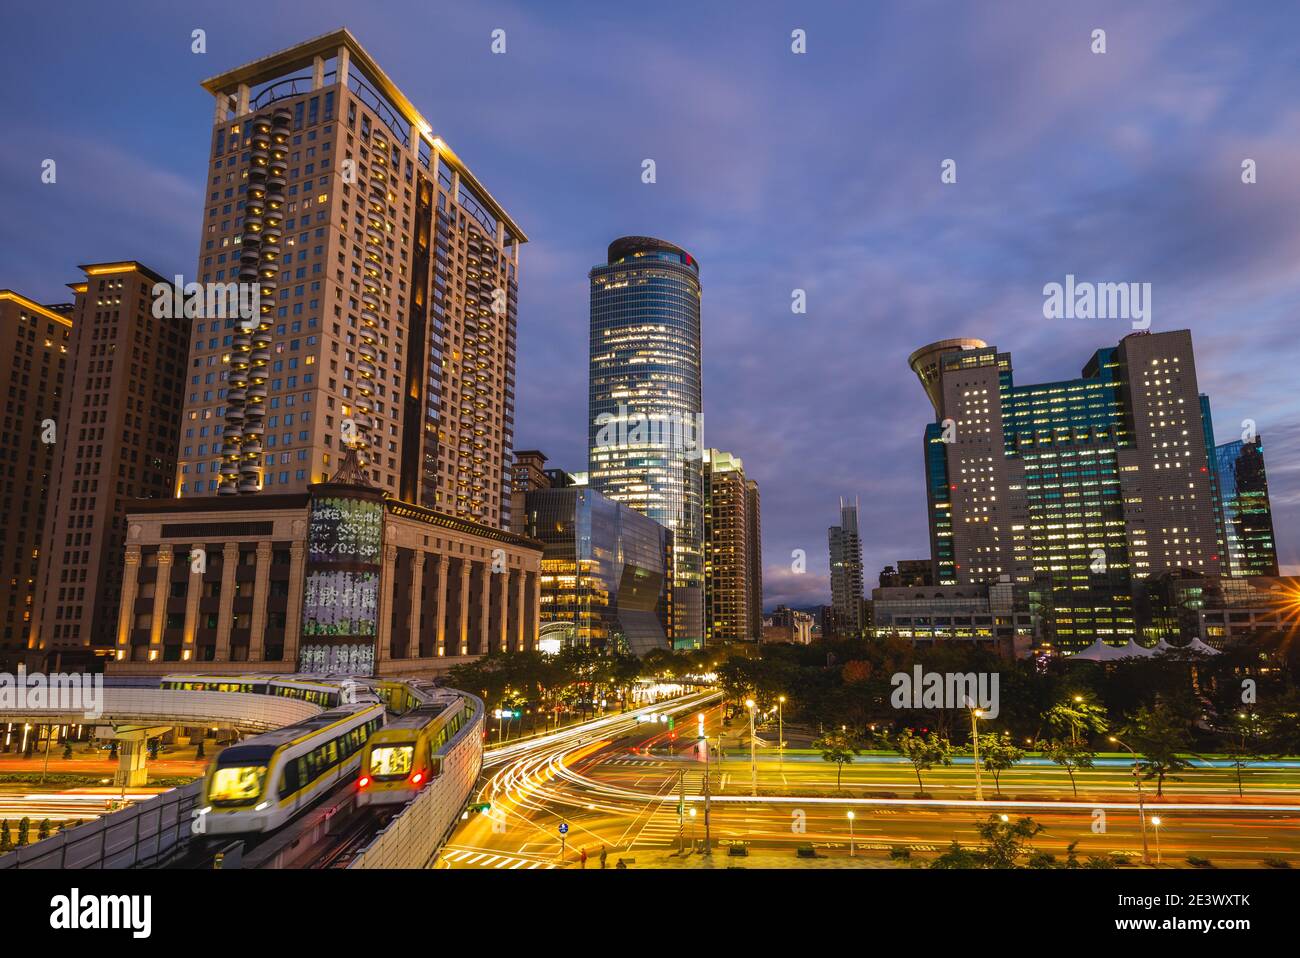 skyline of new taipei city in taiwan at night Stock Photo